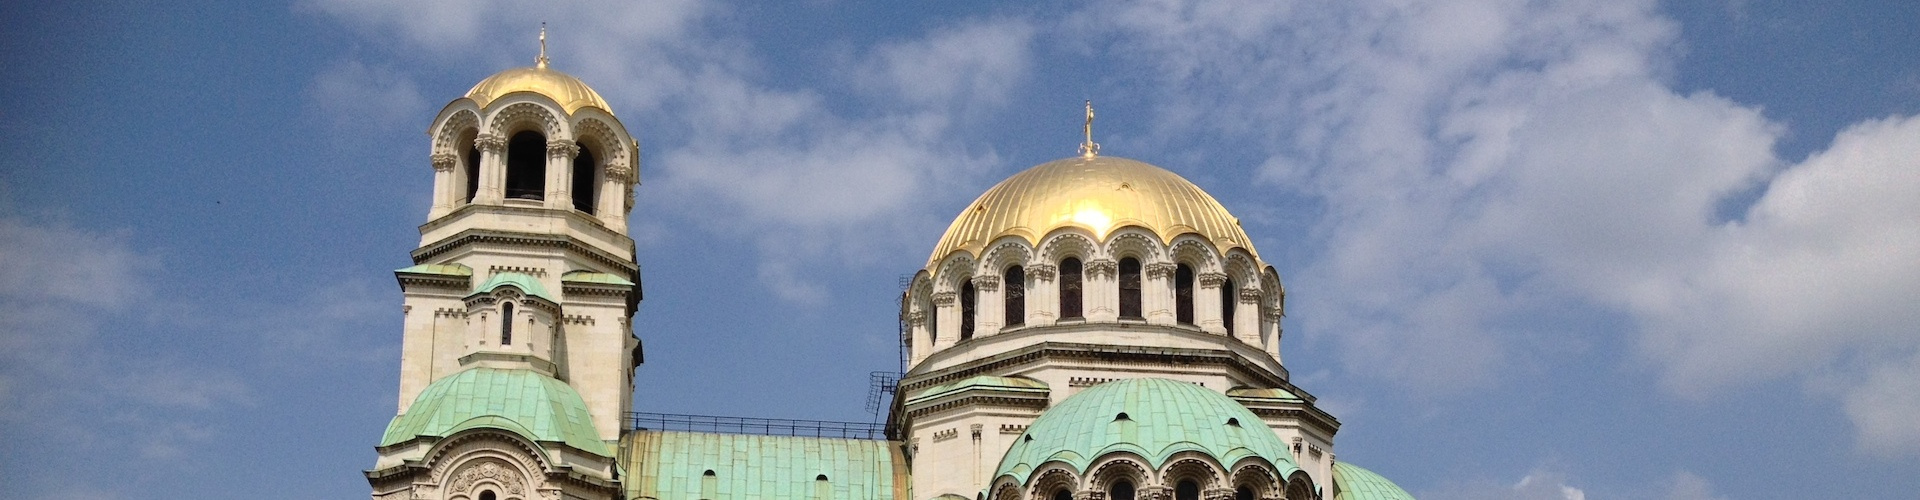 Saint Alexander Nevski Cathedral, Sofia Bulgaria